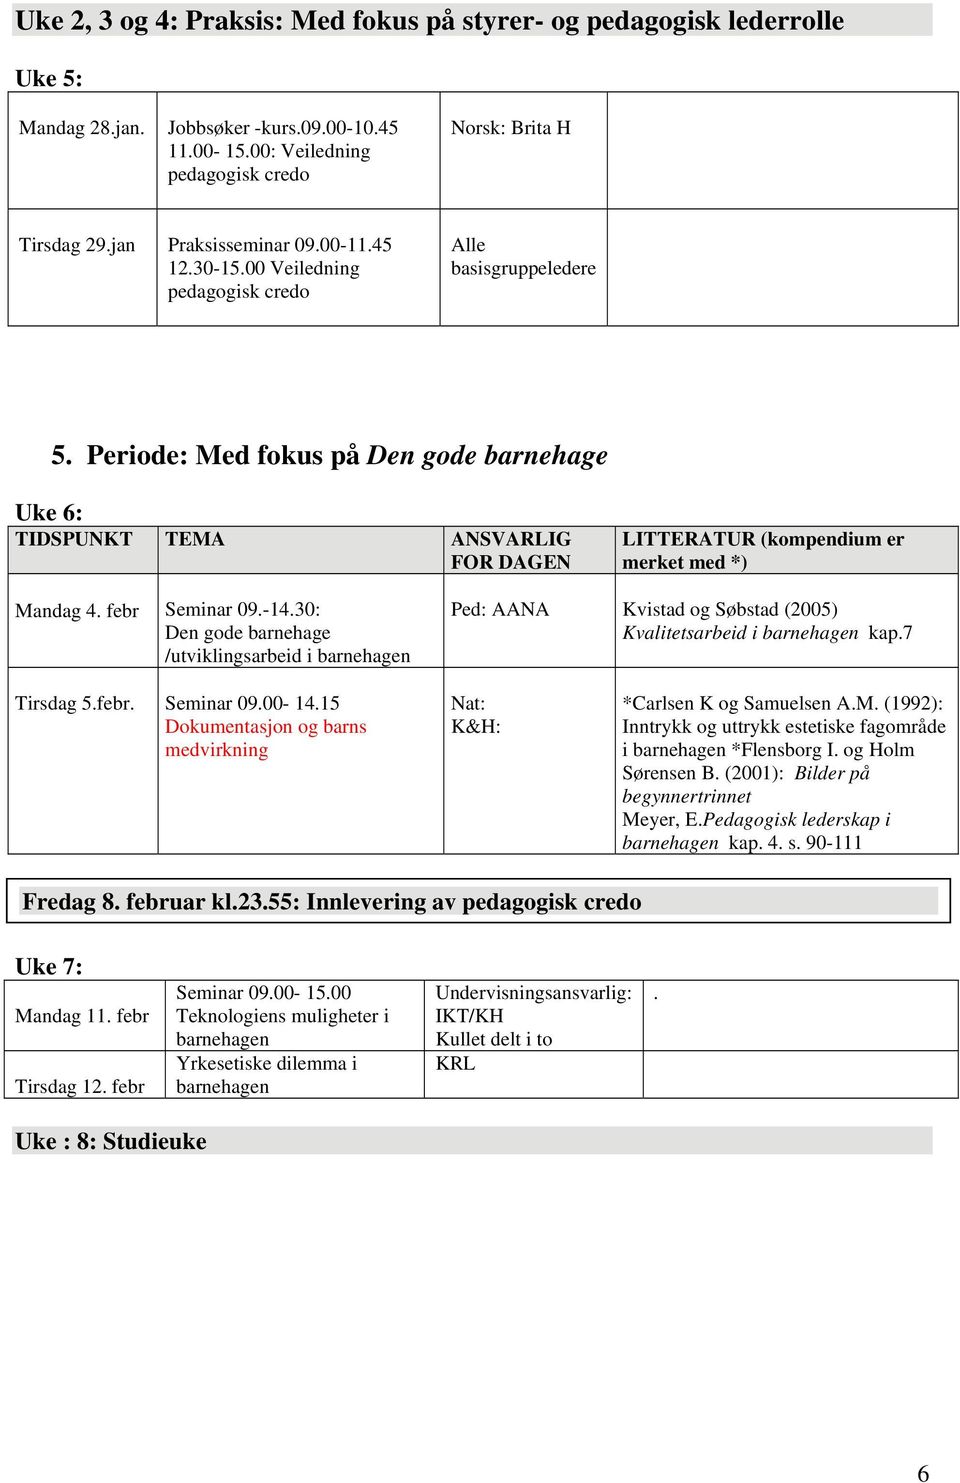 30: Den gode barnehage /utviklingsarbeid i barnehagen Ped: AANA Kvistad og Søbstad (2005) Kvalitetsarbeid i barnehagen kap.7 Tirsdag 5.febr. Seminar 09.00-14.